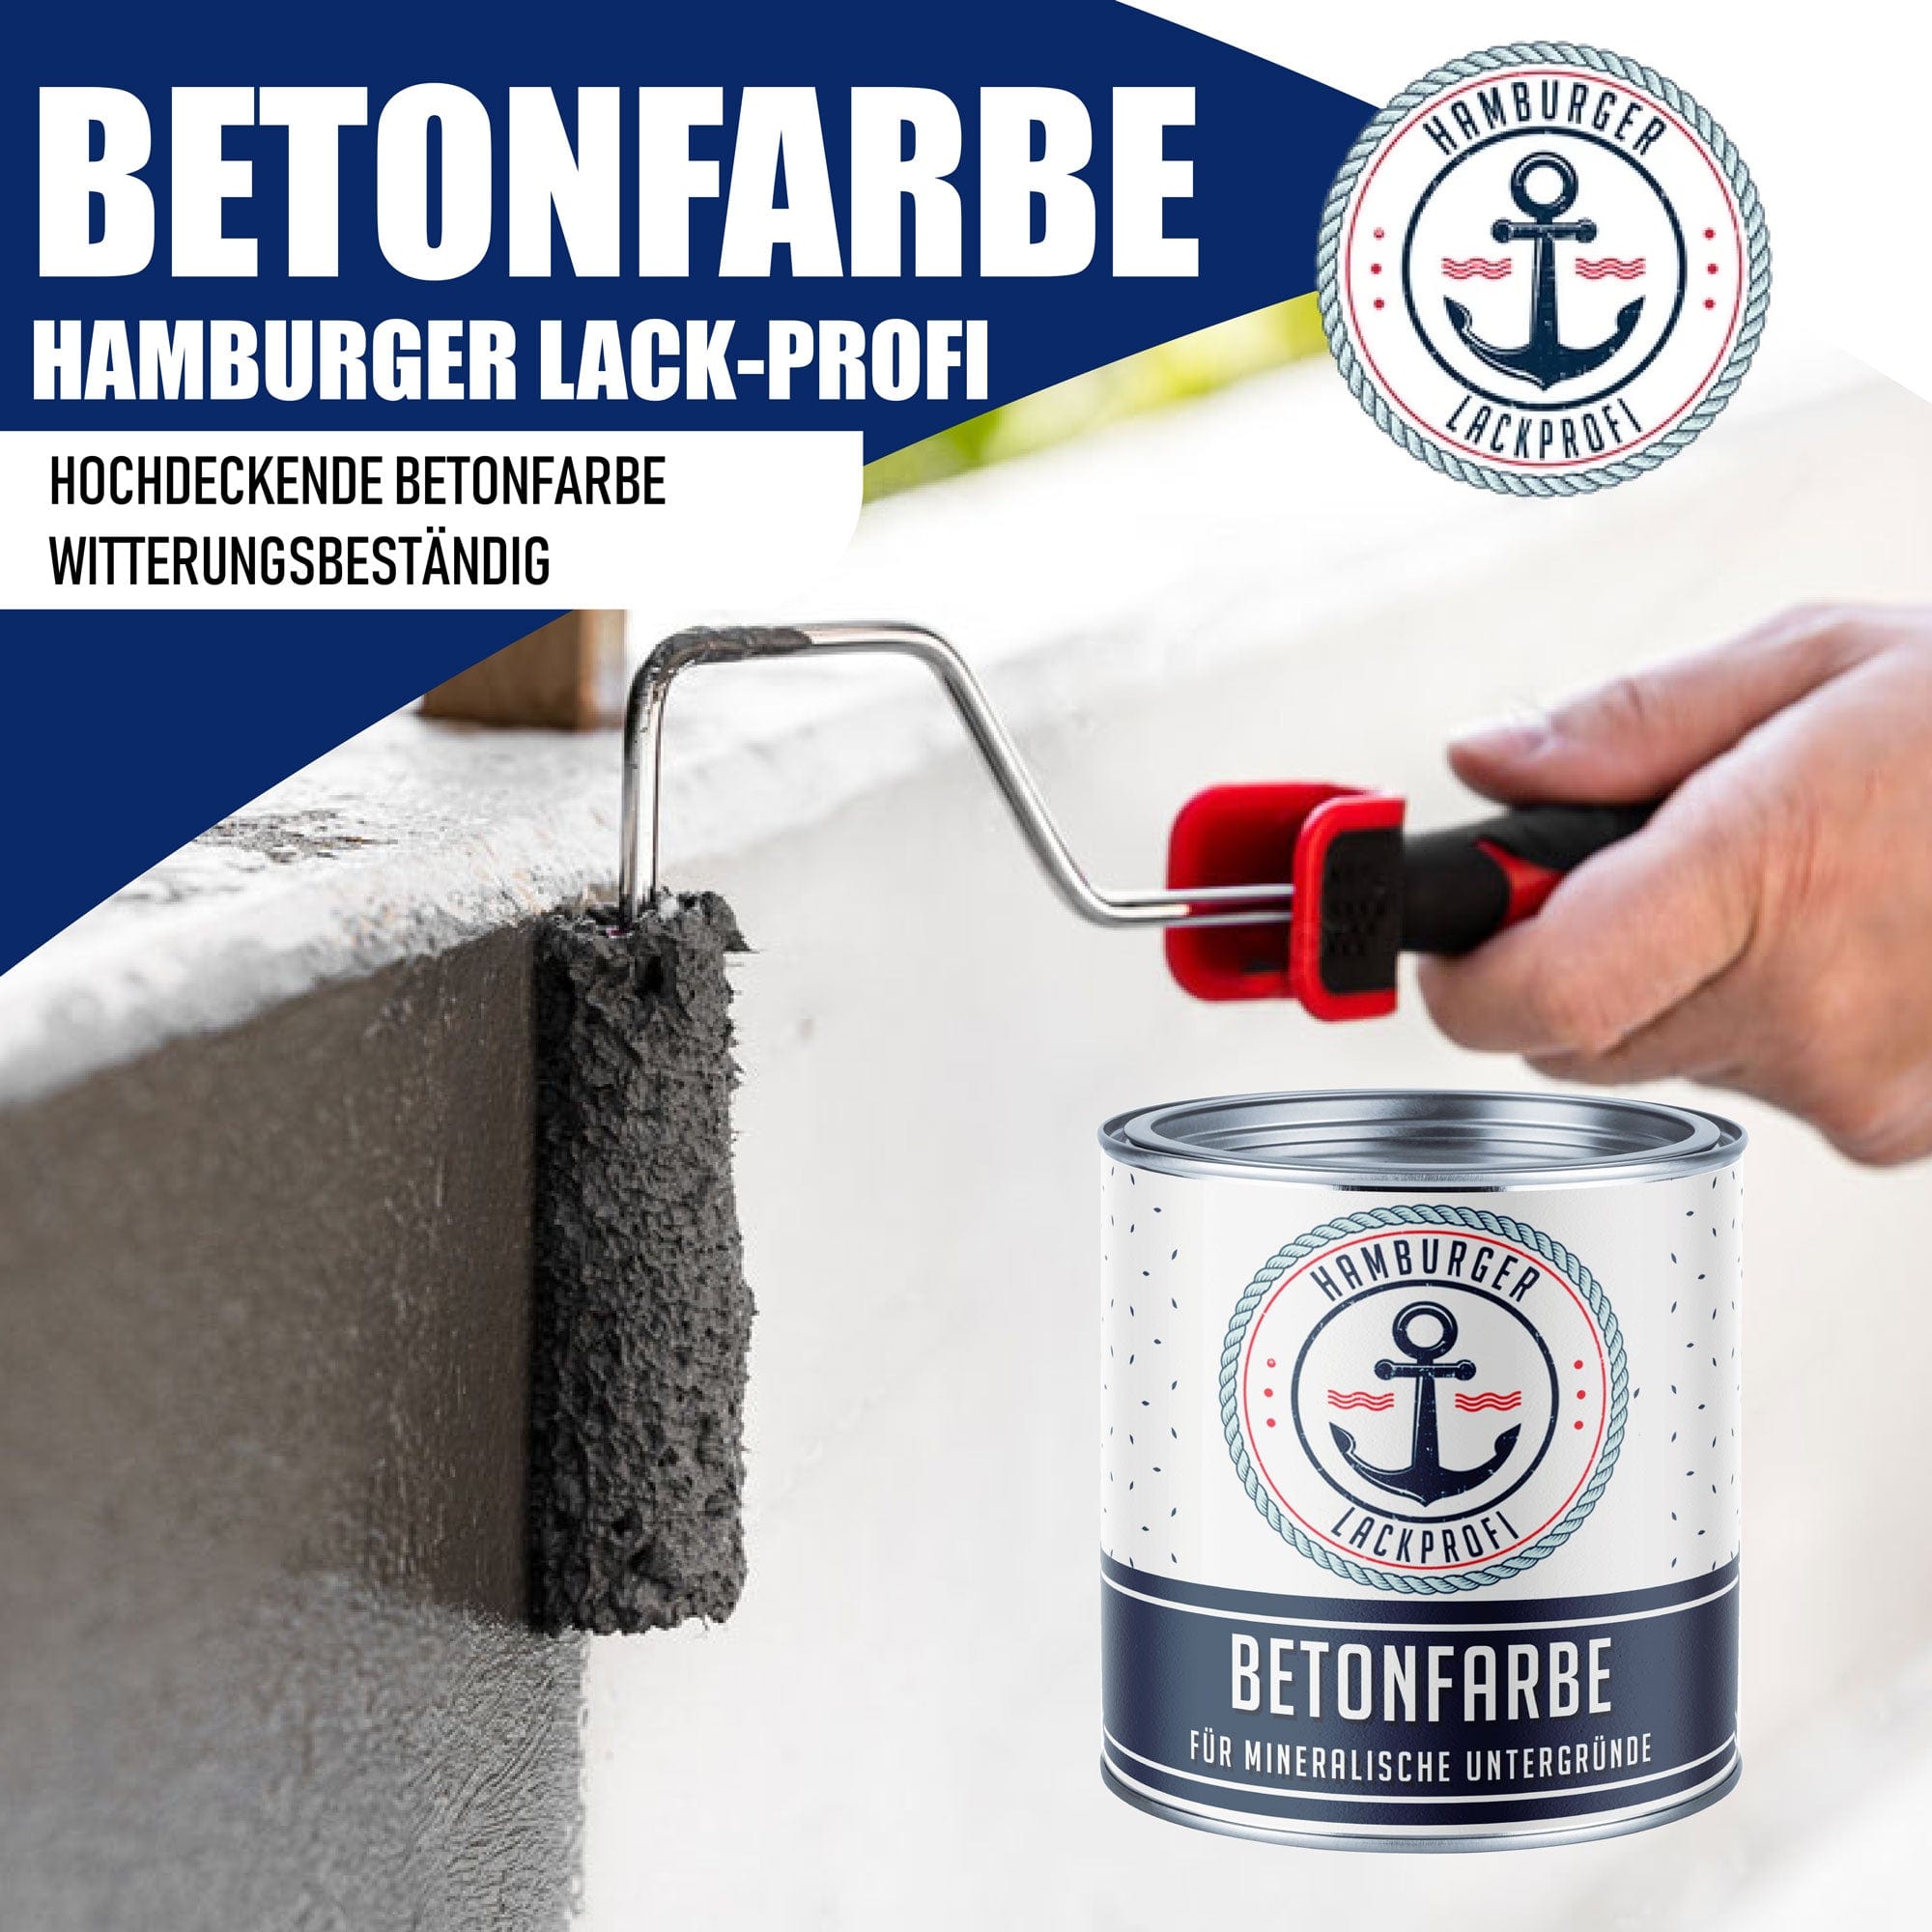 Hamburger Lack-Profi Lacke & Beschichtungen Hamburger Lack-Profi Betonfarbe - hochdeckende Fassadenfarbe